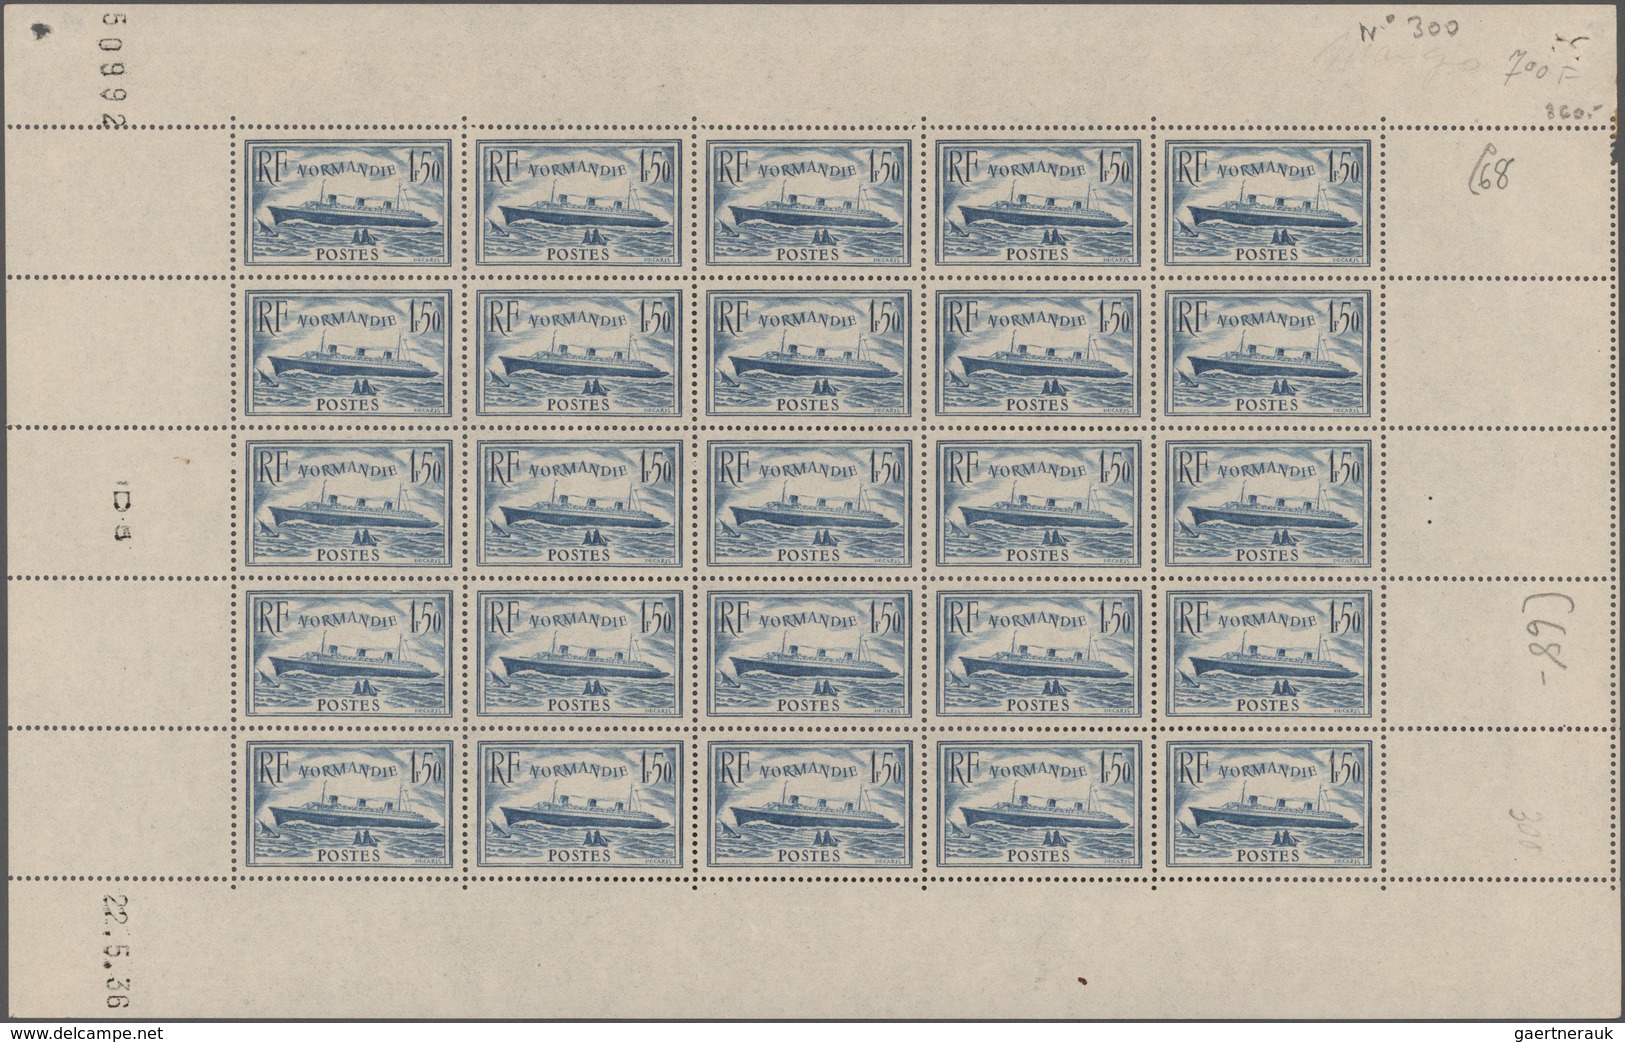 Frankreich: 1936, Steamer "Normandie" 1.50fr. Light Blue, Sheet Of 25 Stamps, Mint Never Hinged (sli - Colecciones Completas